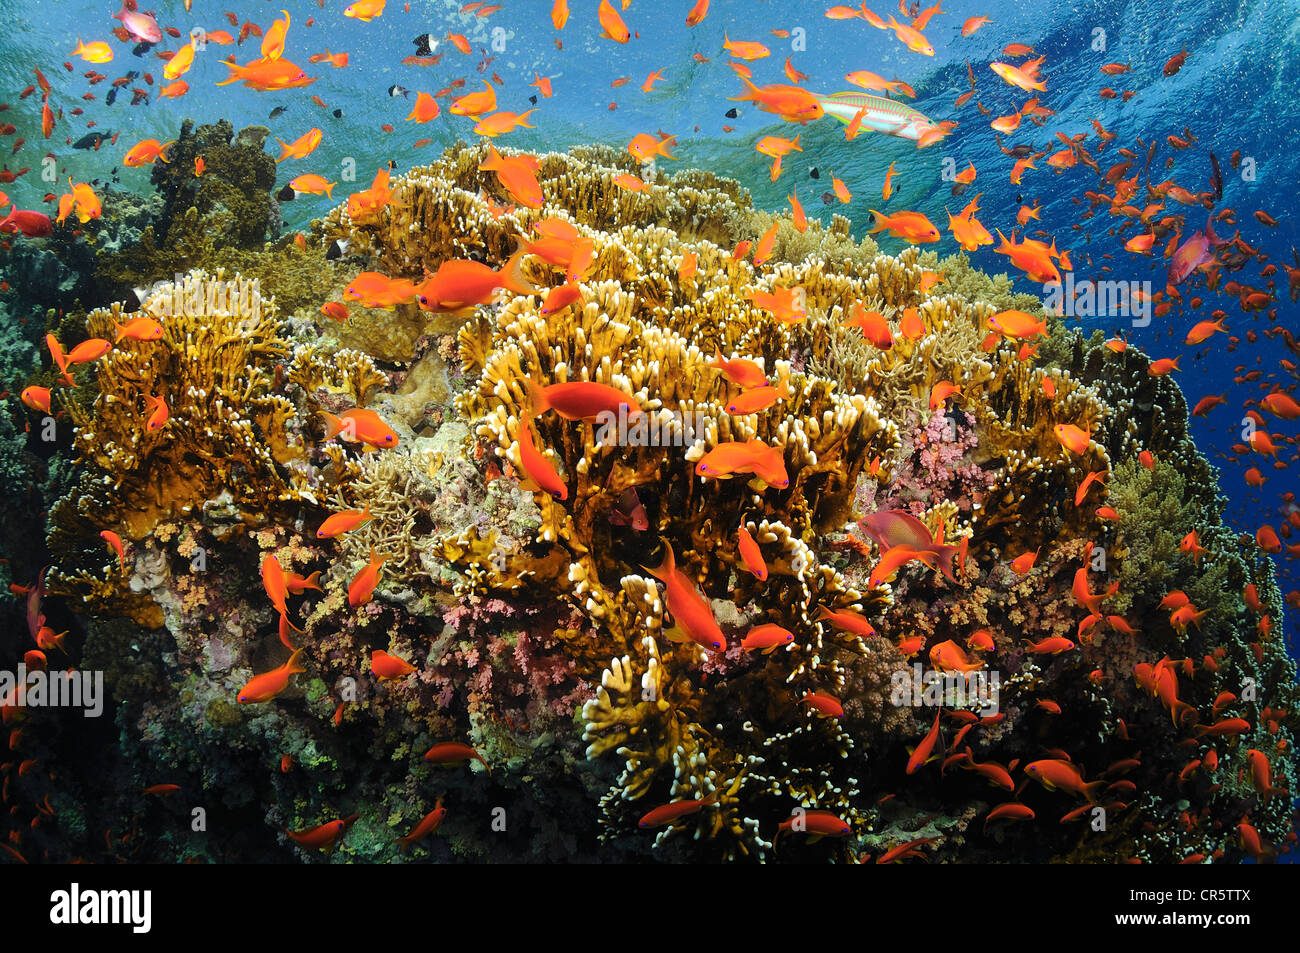 Egipto, el Mar Rojo, un arrecife de coral, vista submarina Foto de stock